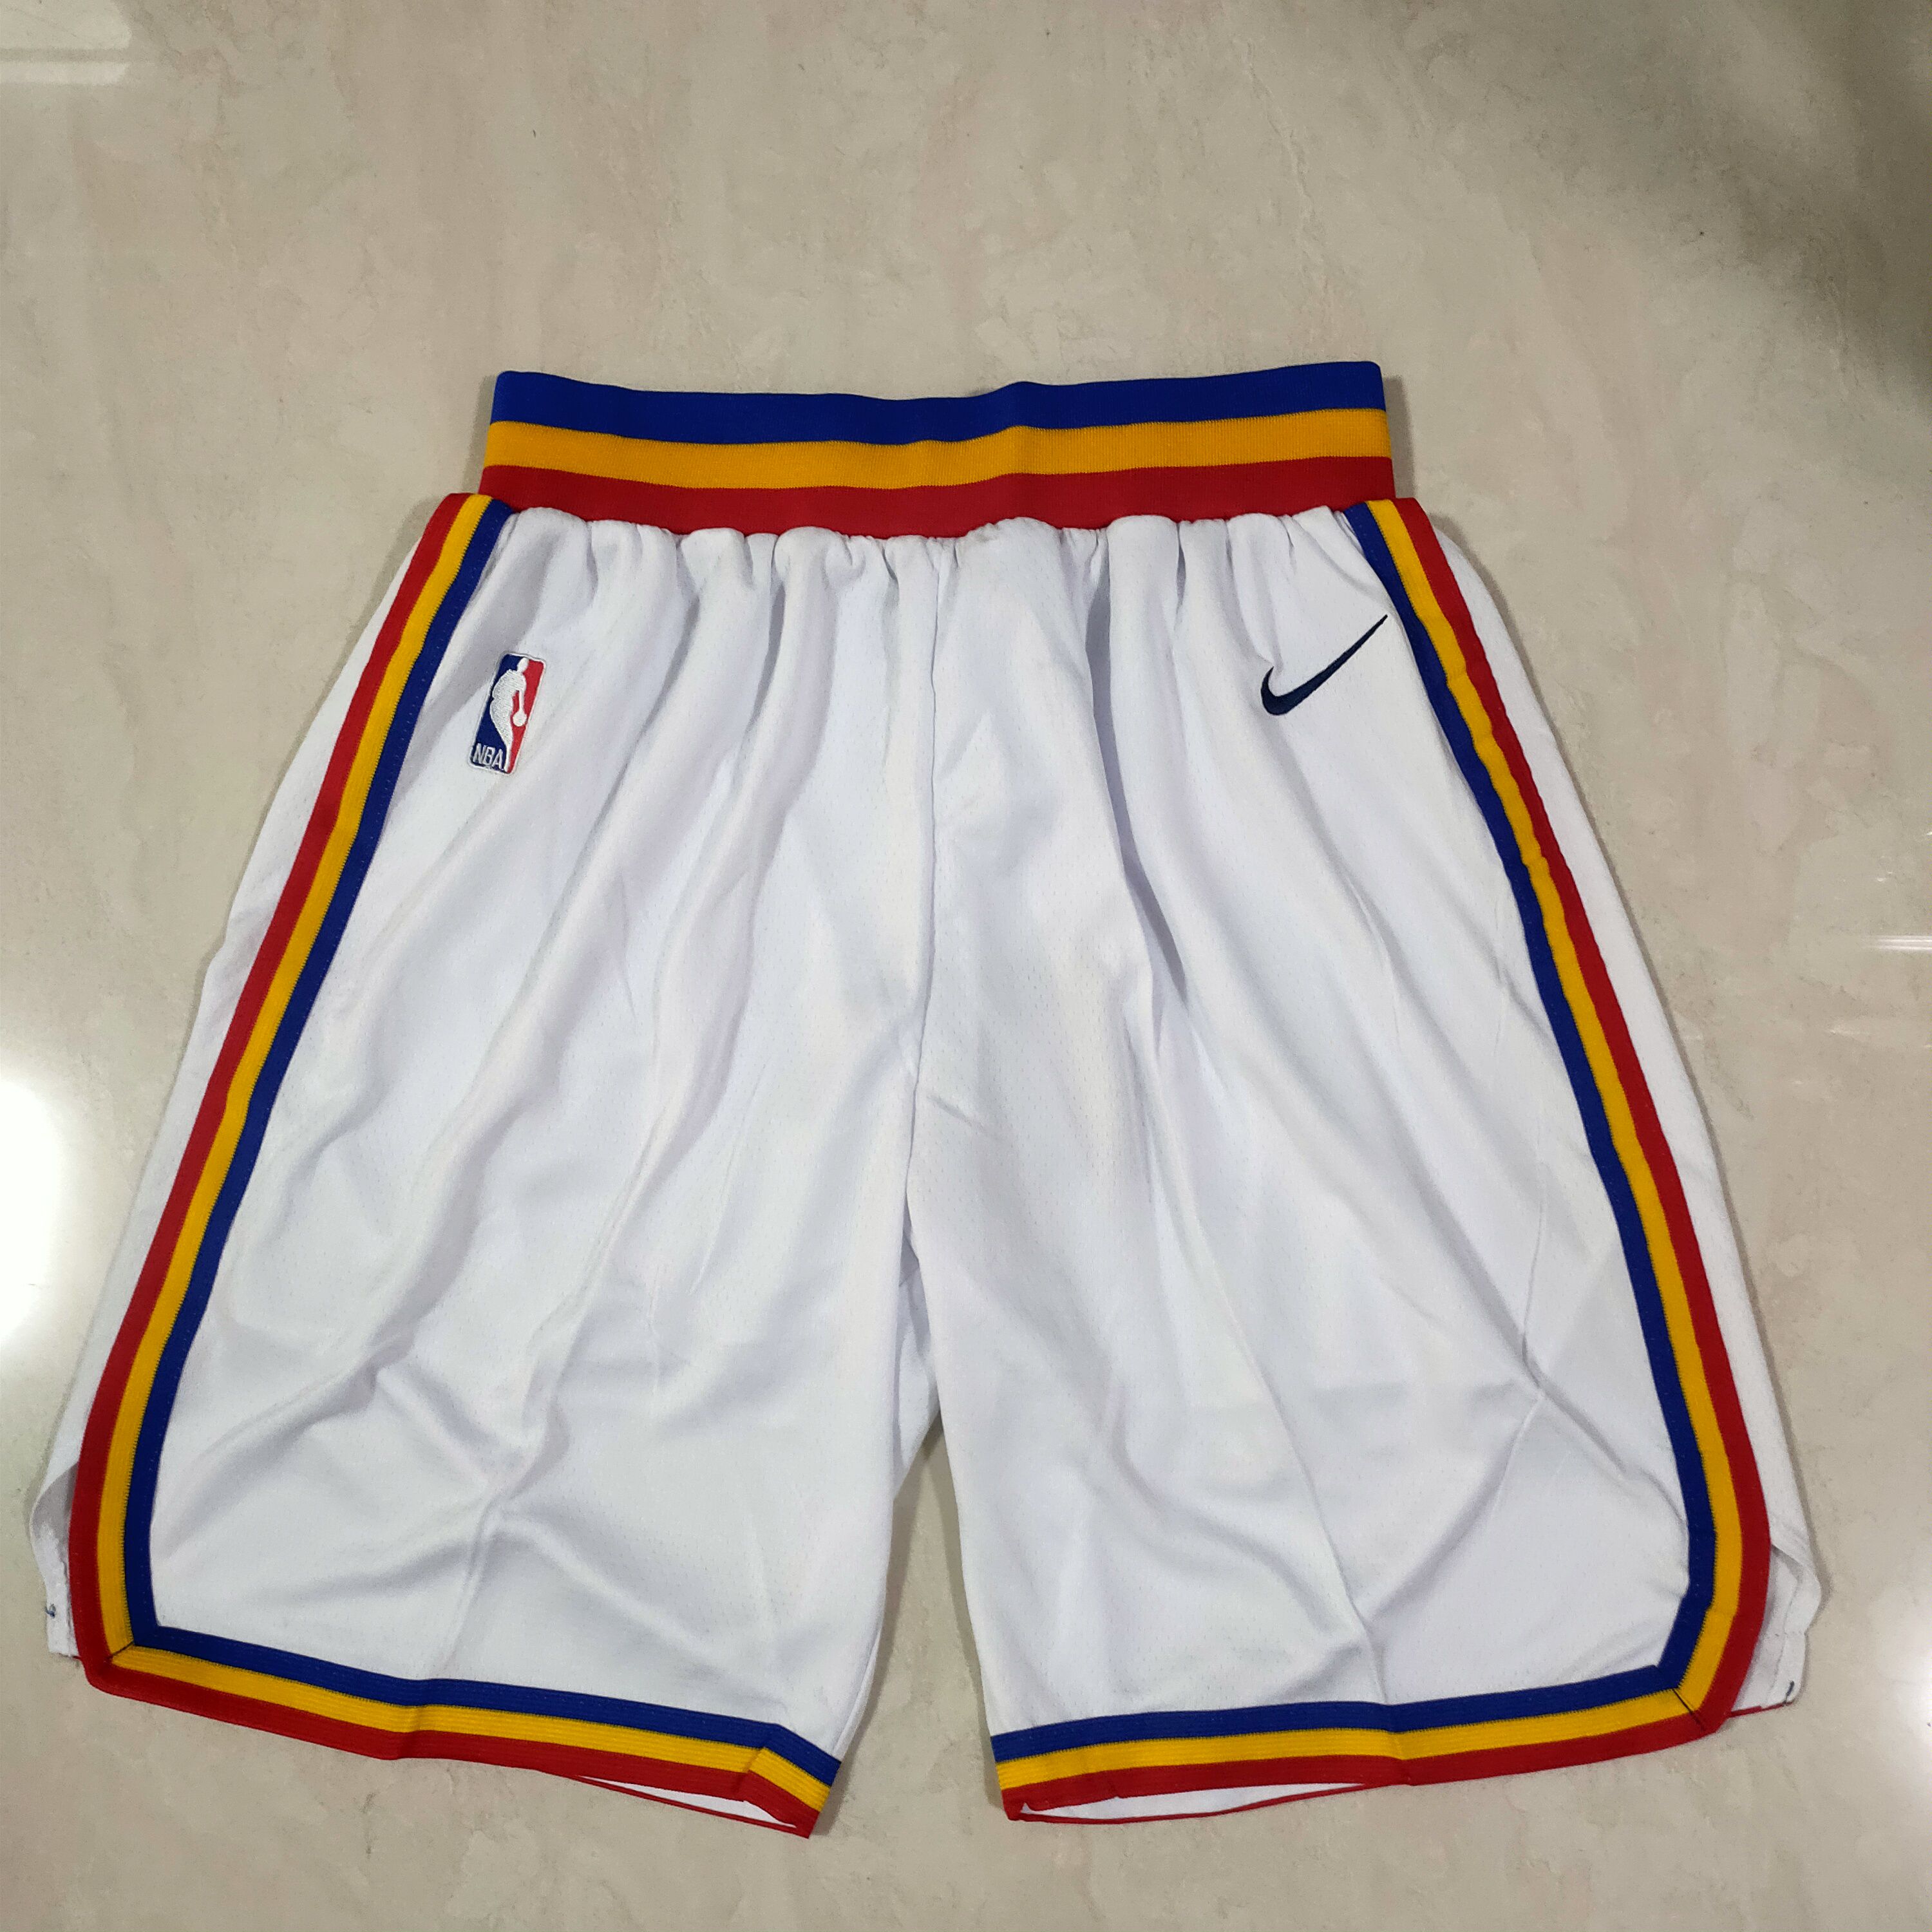 Cheap Men NBA Golden State Warriors White Shorts 0416